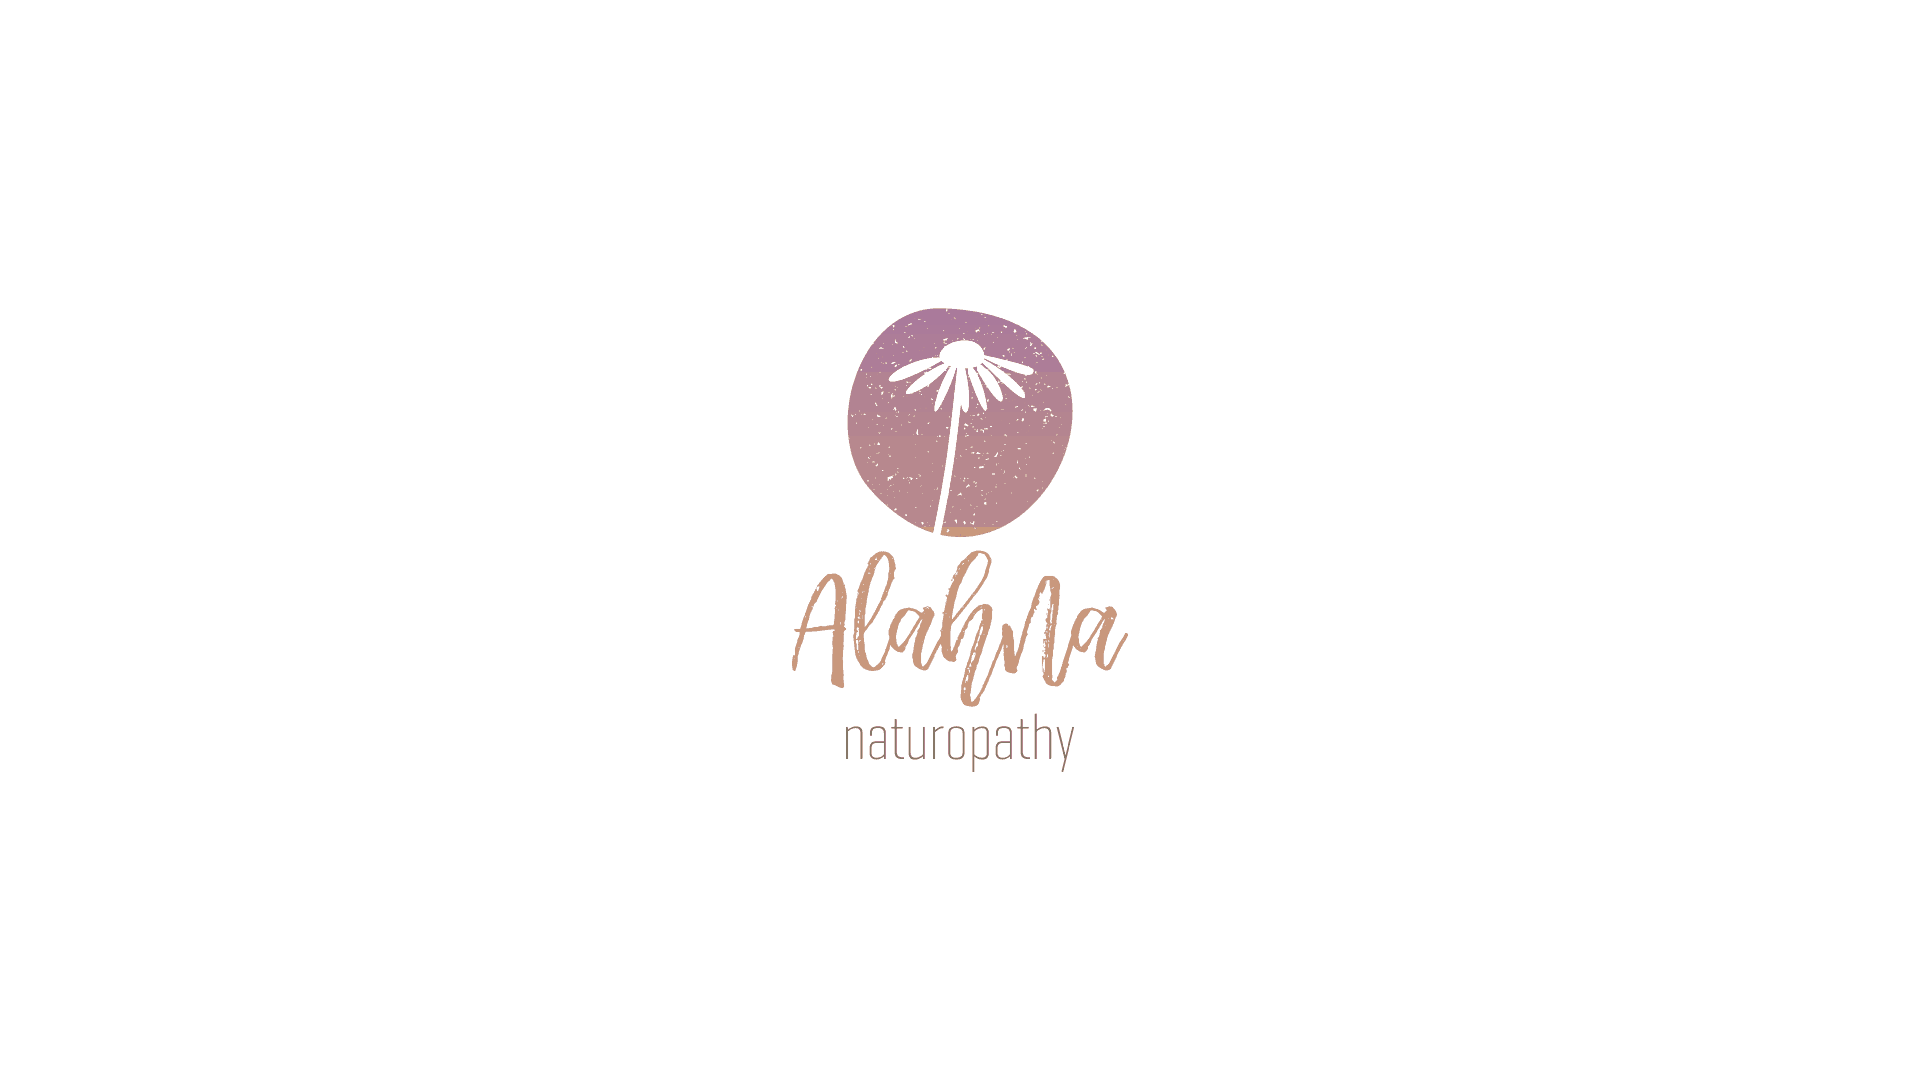 Alahna naturopathy logo design